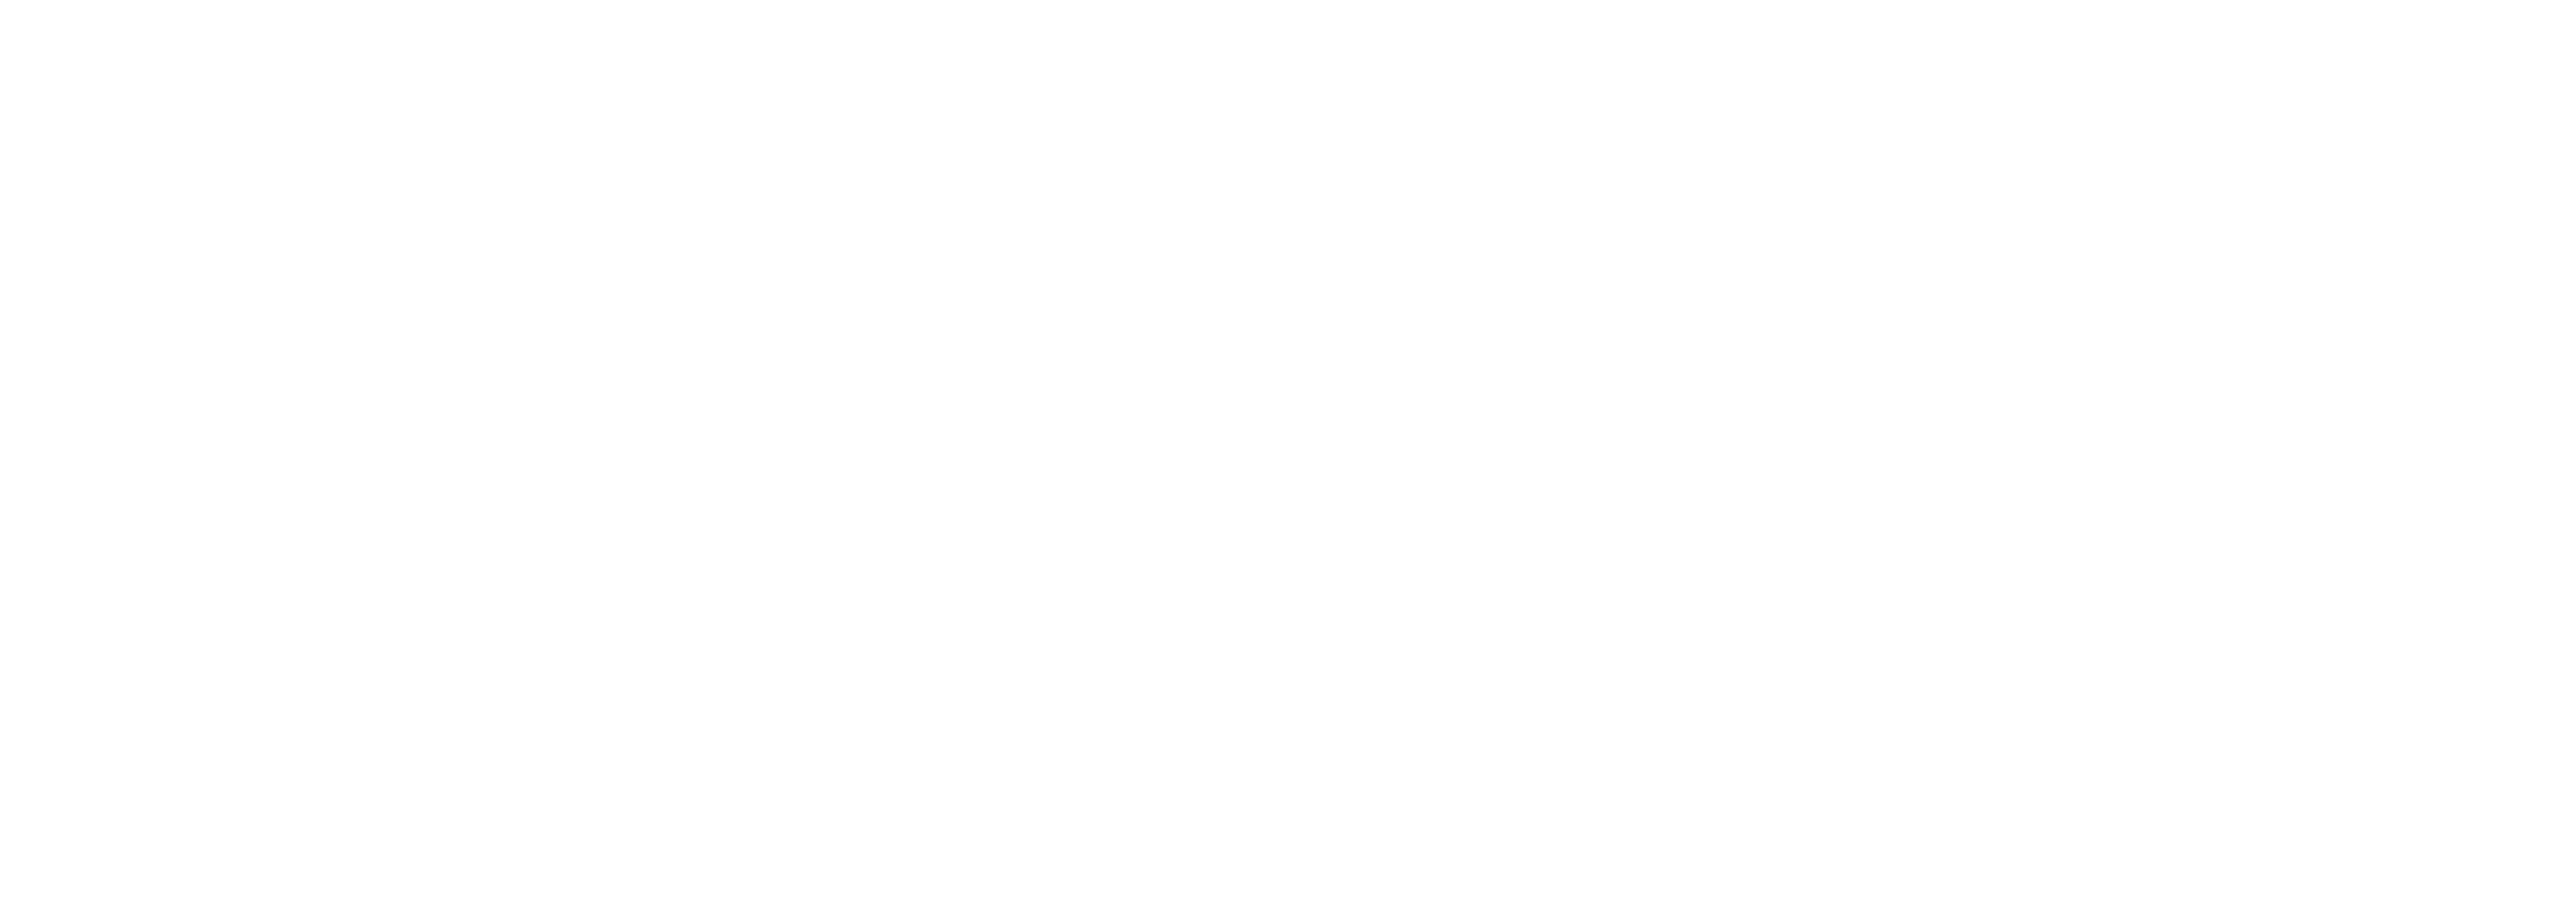 Catalyst Management Consultancy Logo